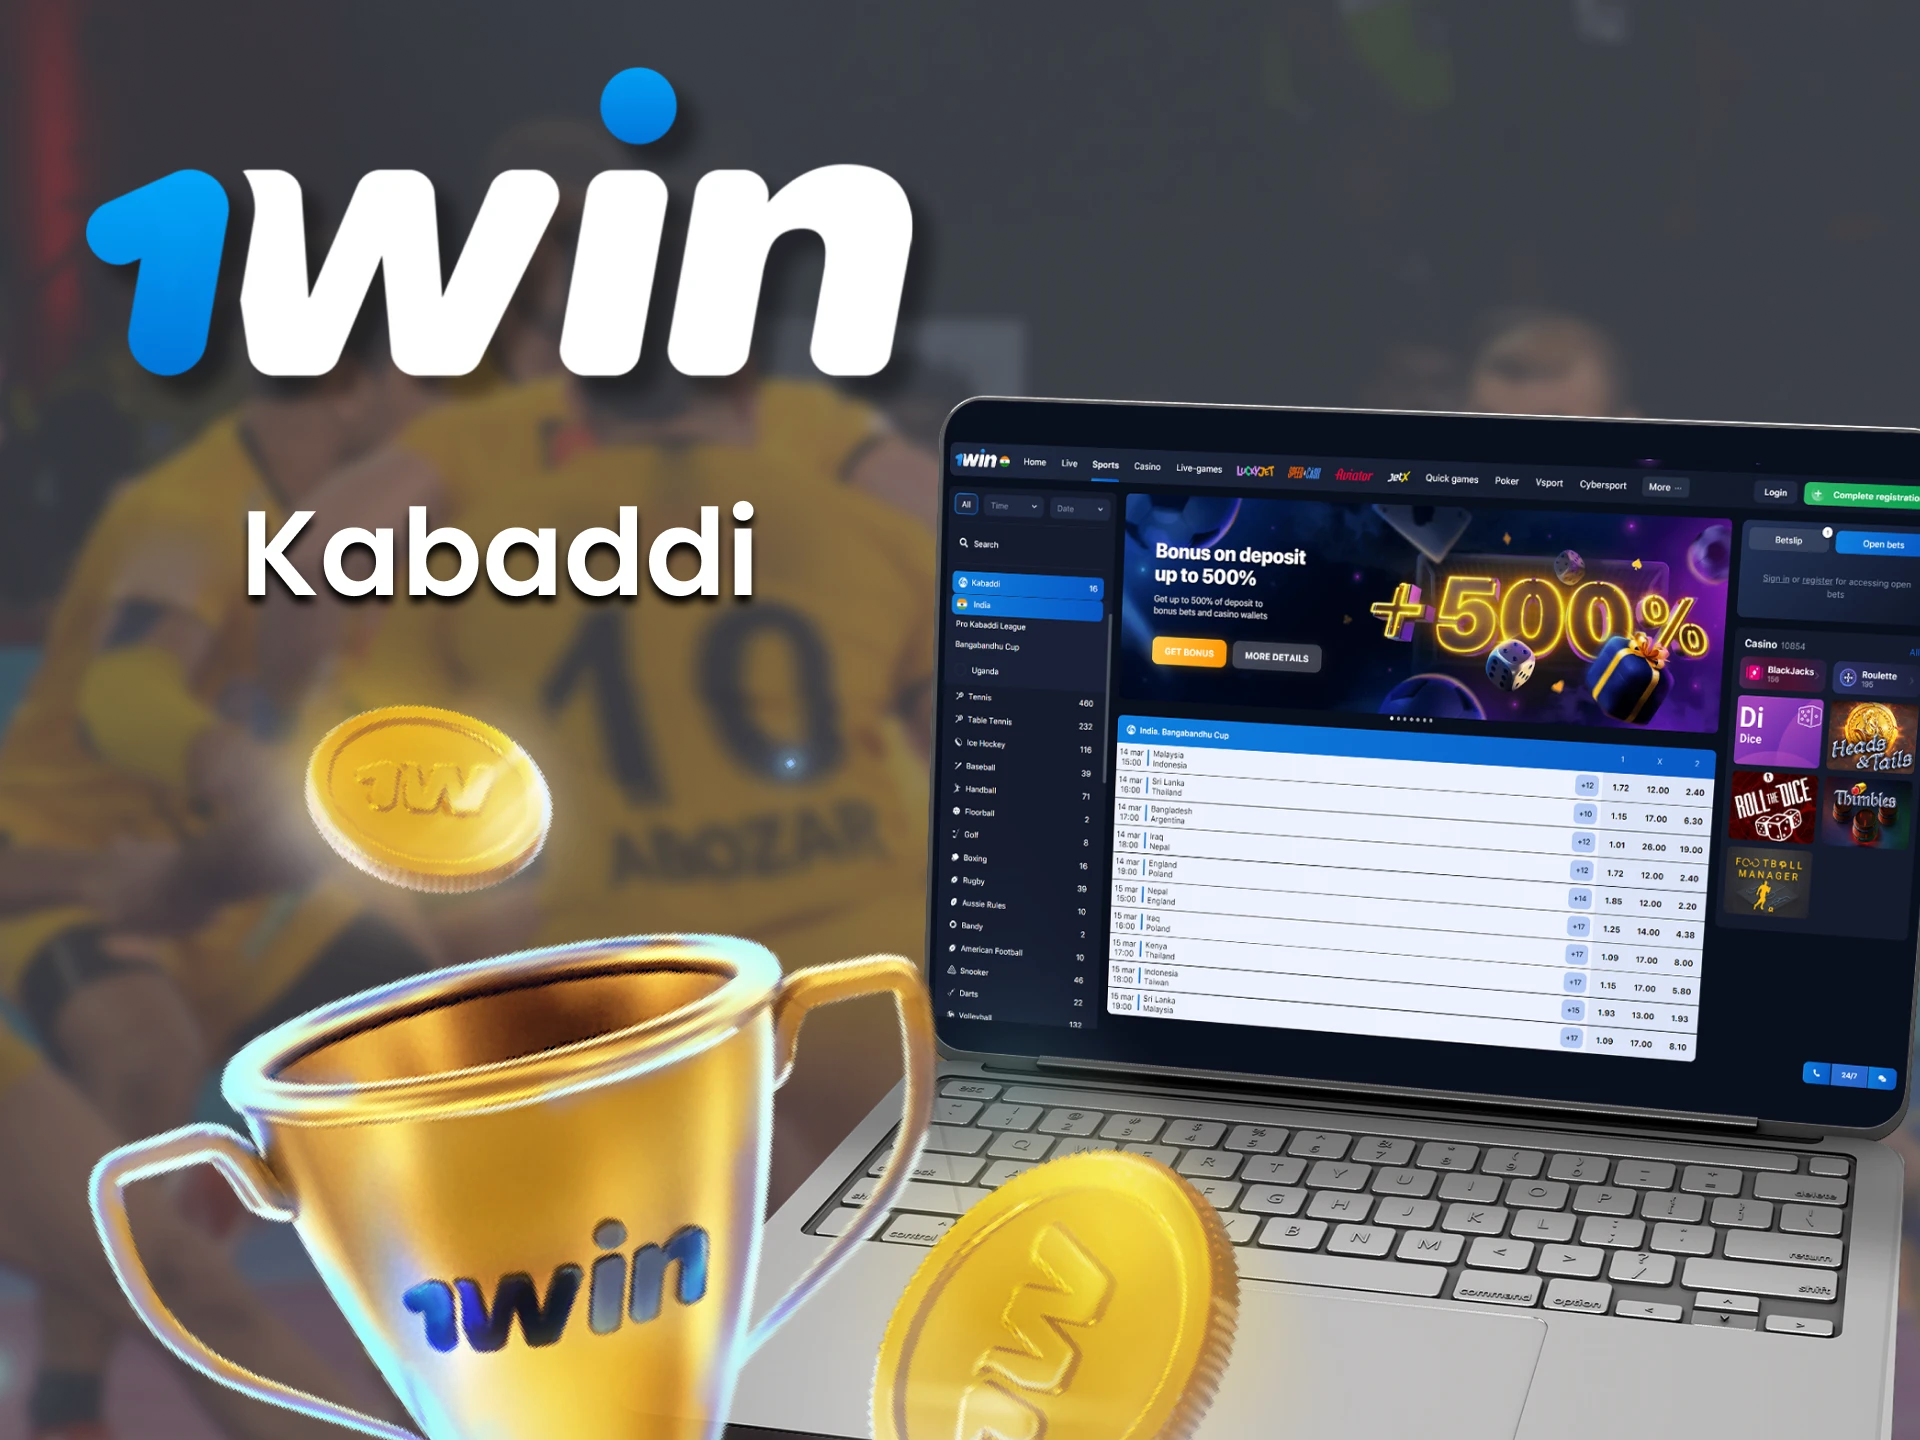 If you like kabaddi, then bet on 1win.